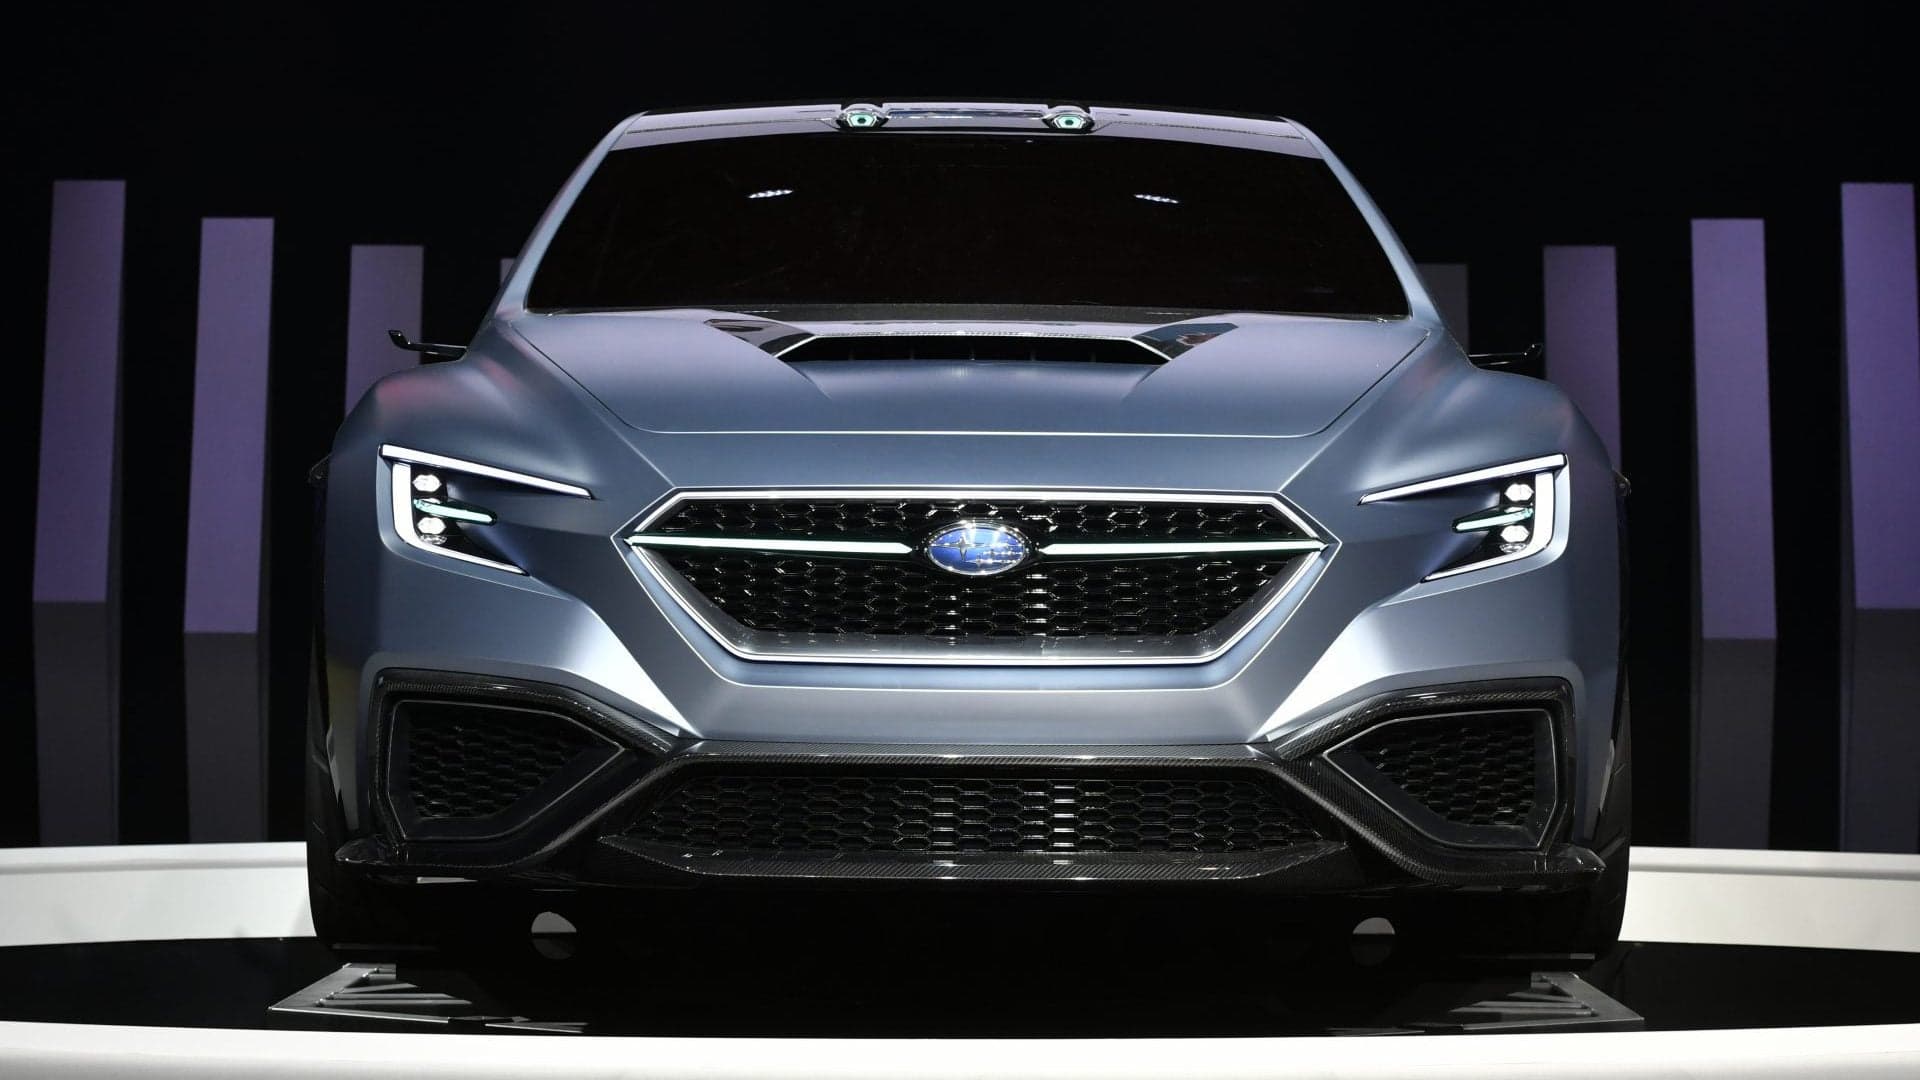 Rumor: Subaru Working on Mid-Engined Hybrid Sports Car